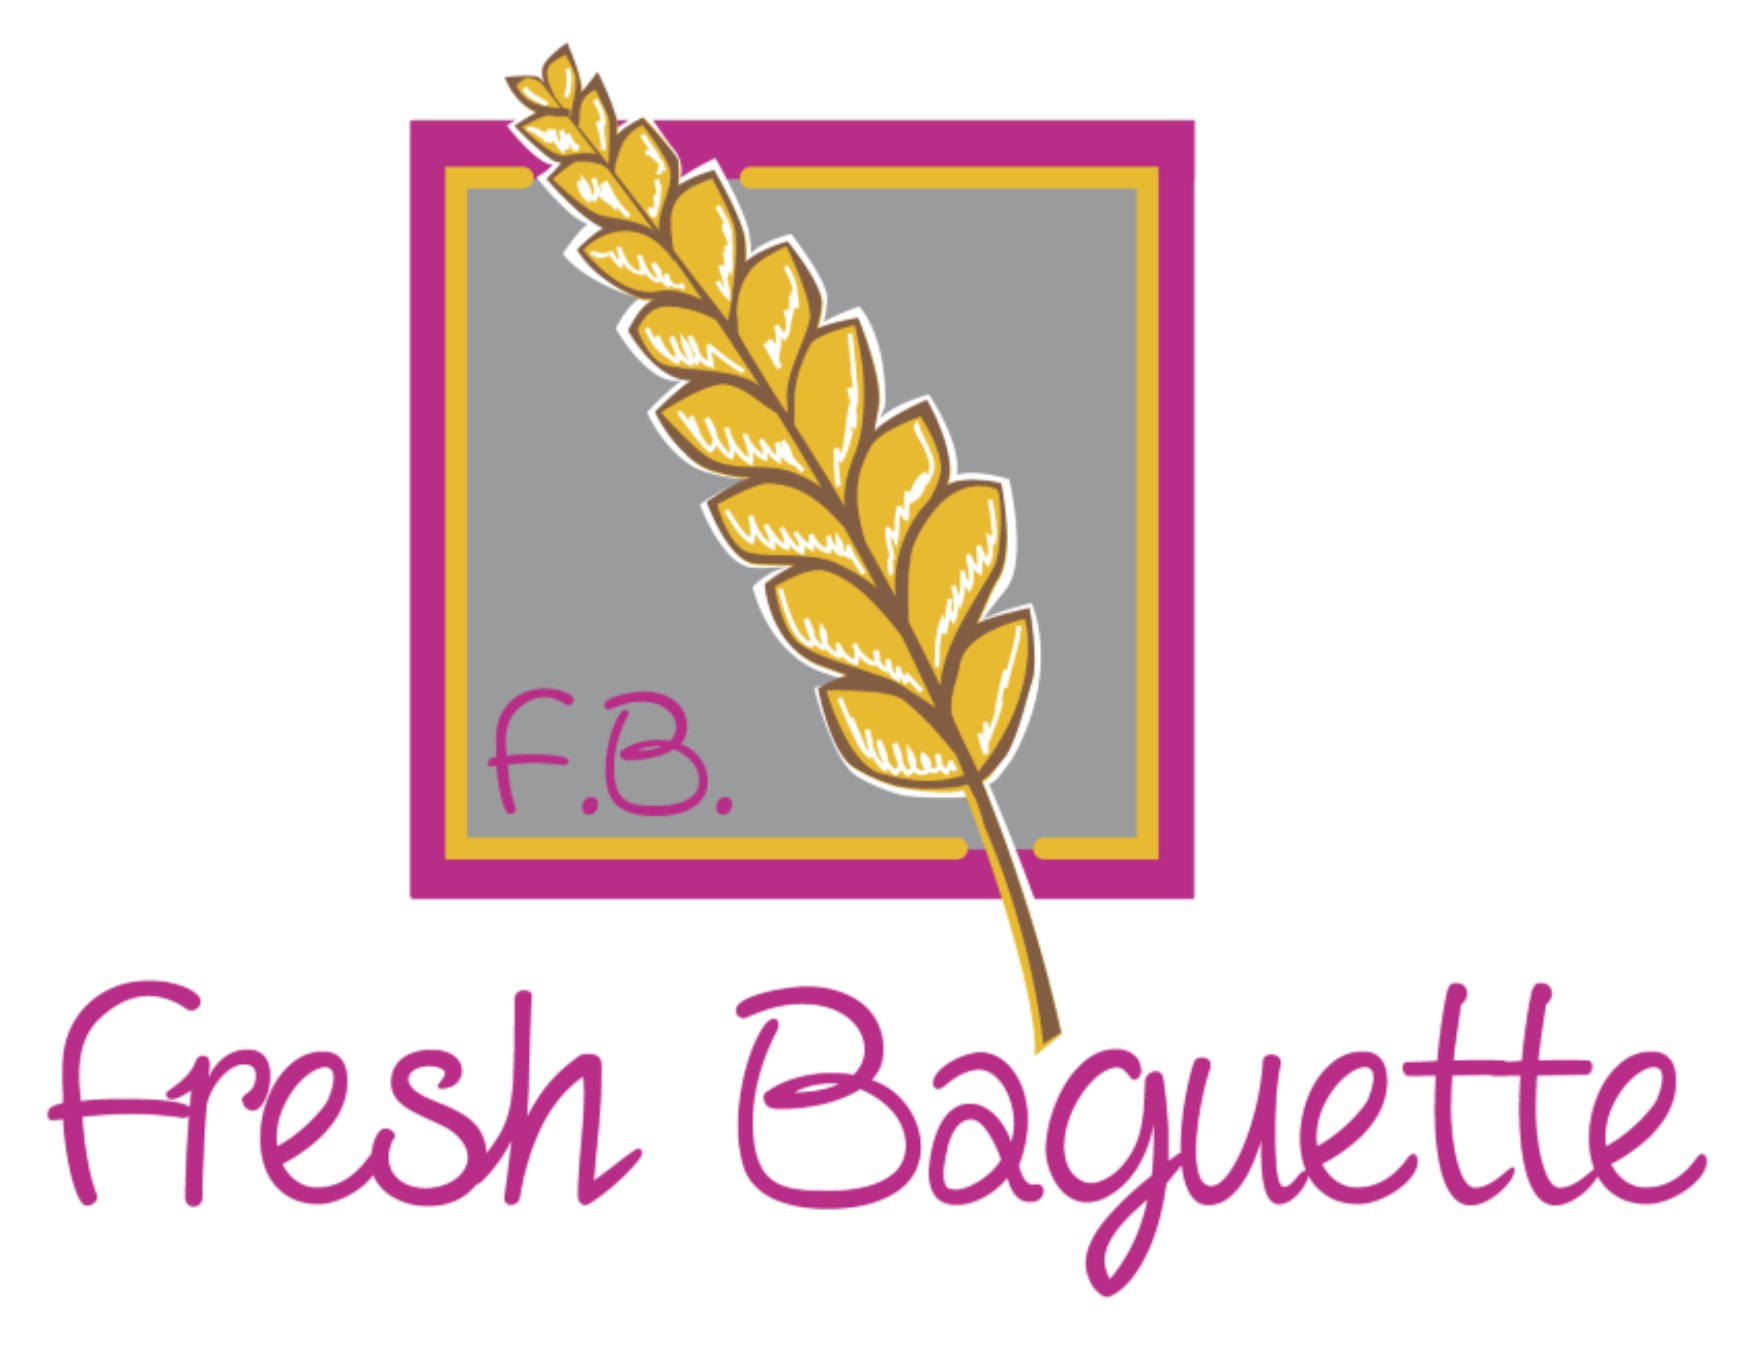 copy of fresh baguette logo